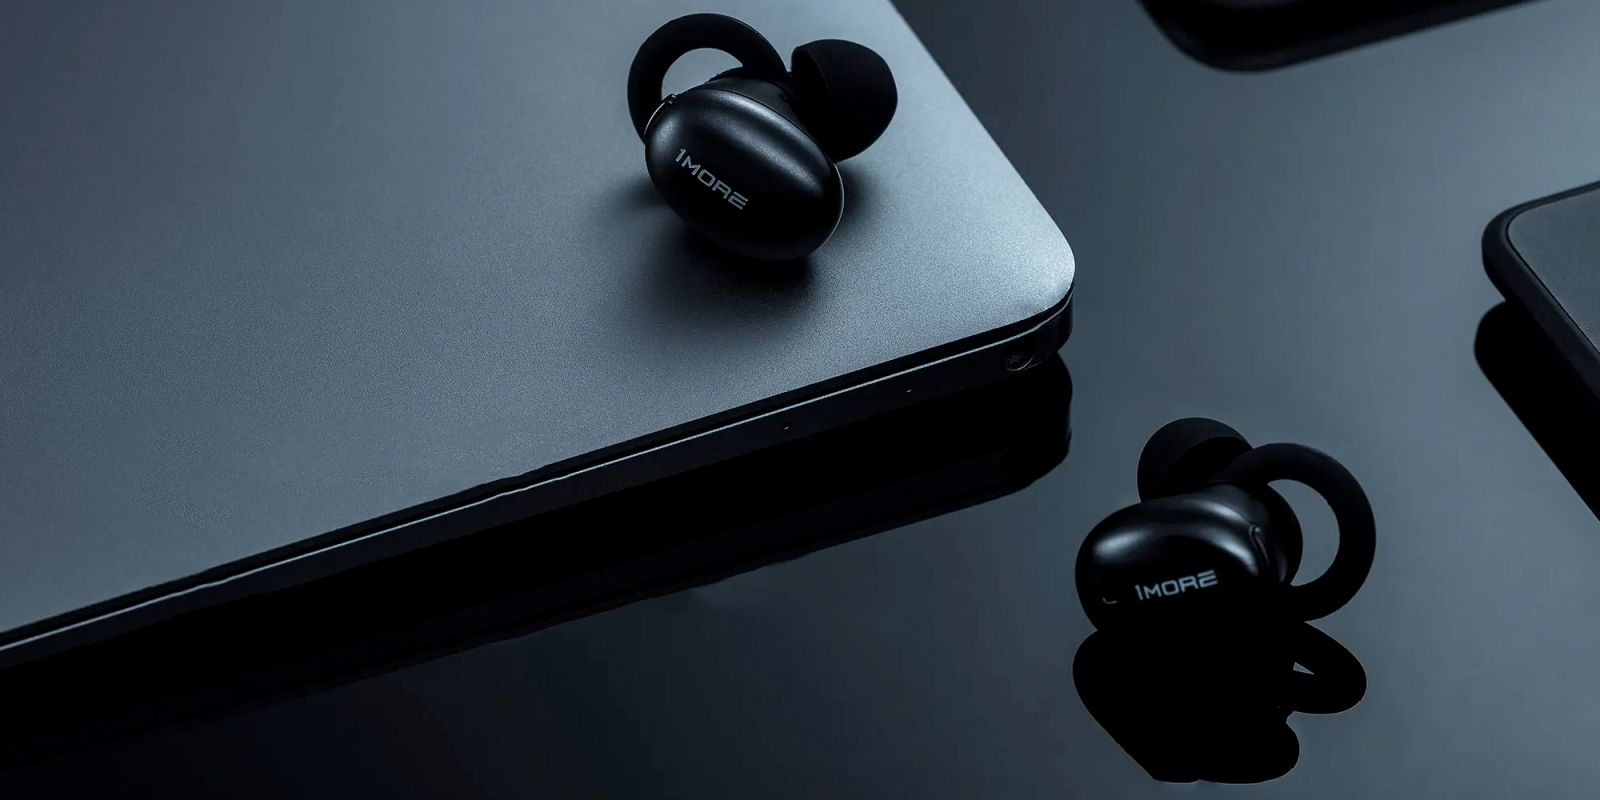 Stylish True Wireless Headphones 1more сучасні навушники